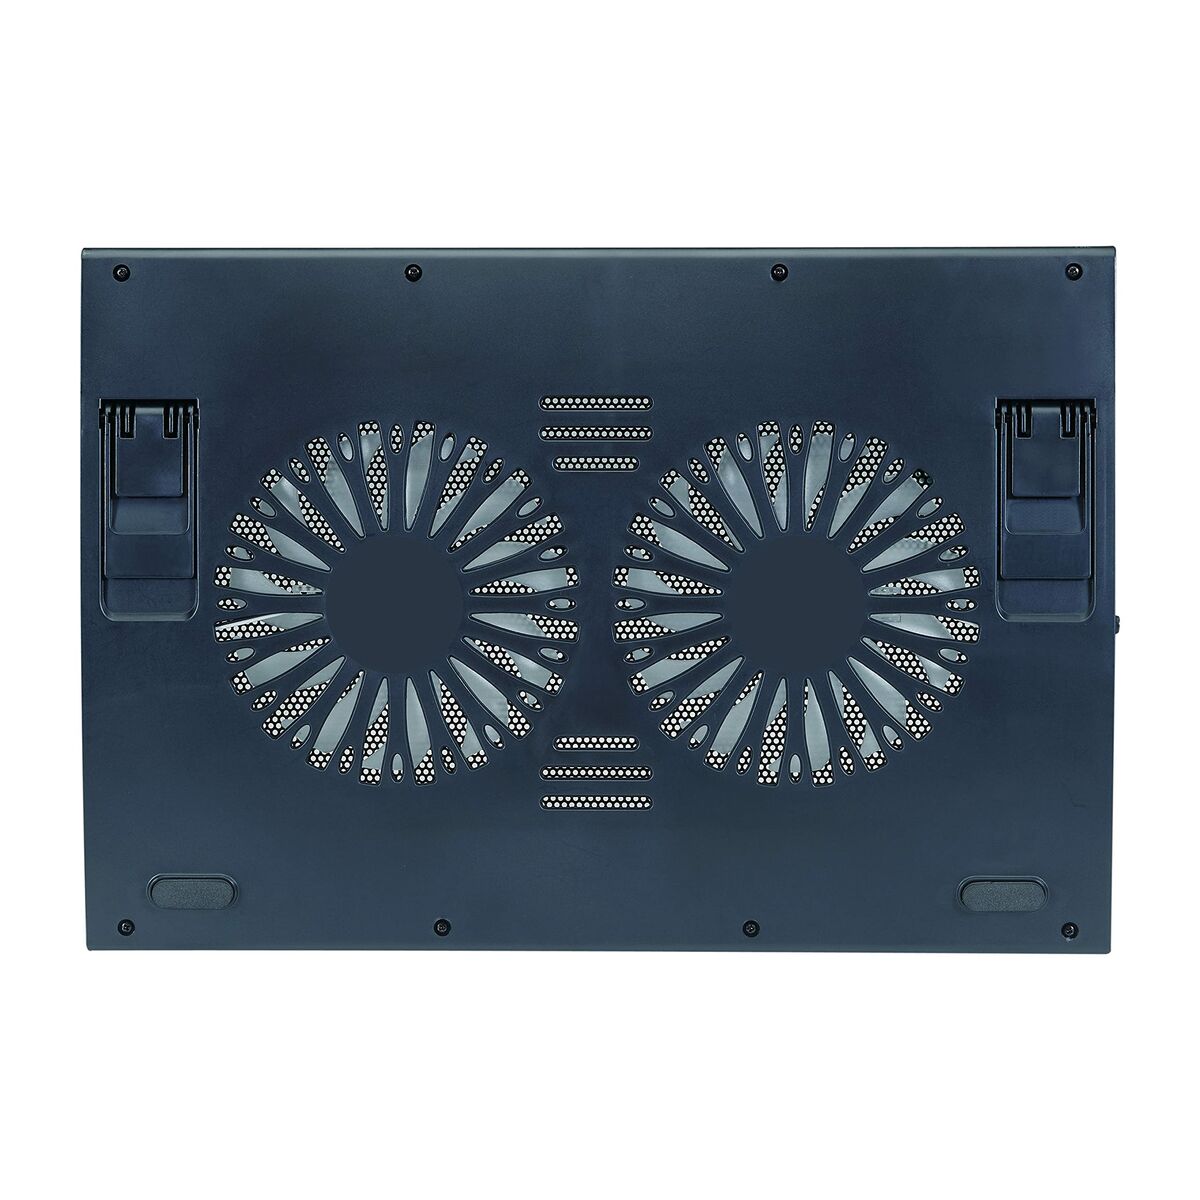 Tragbare Kühlbox Conceptronic THANA02B Schwarz - CA International 